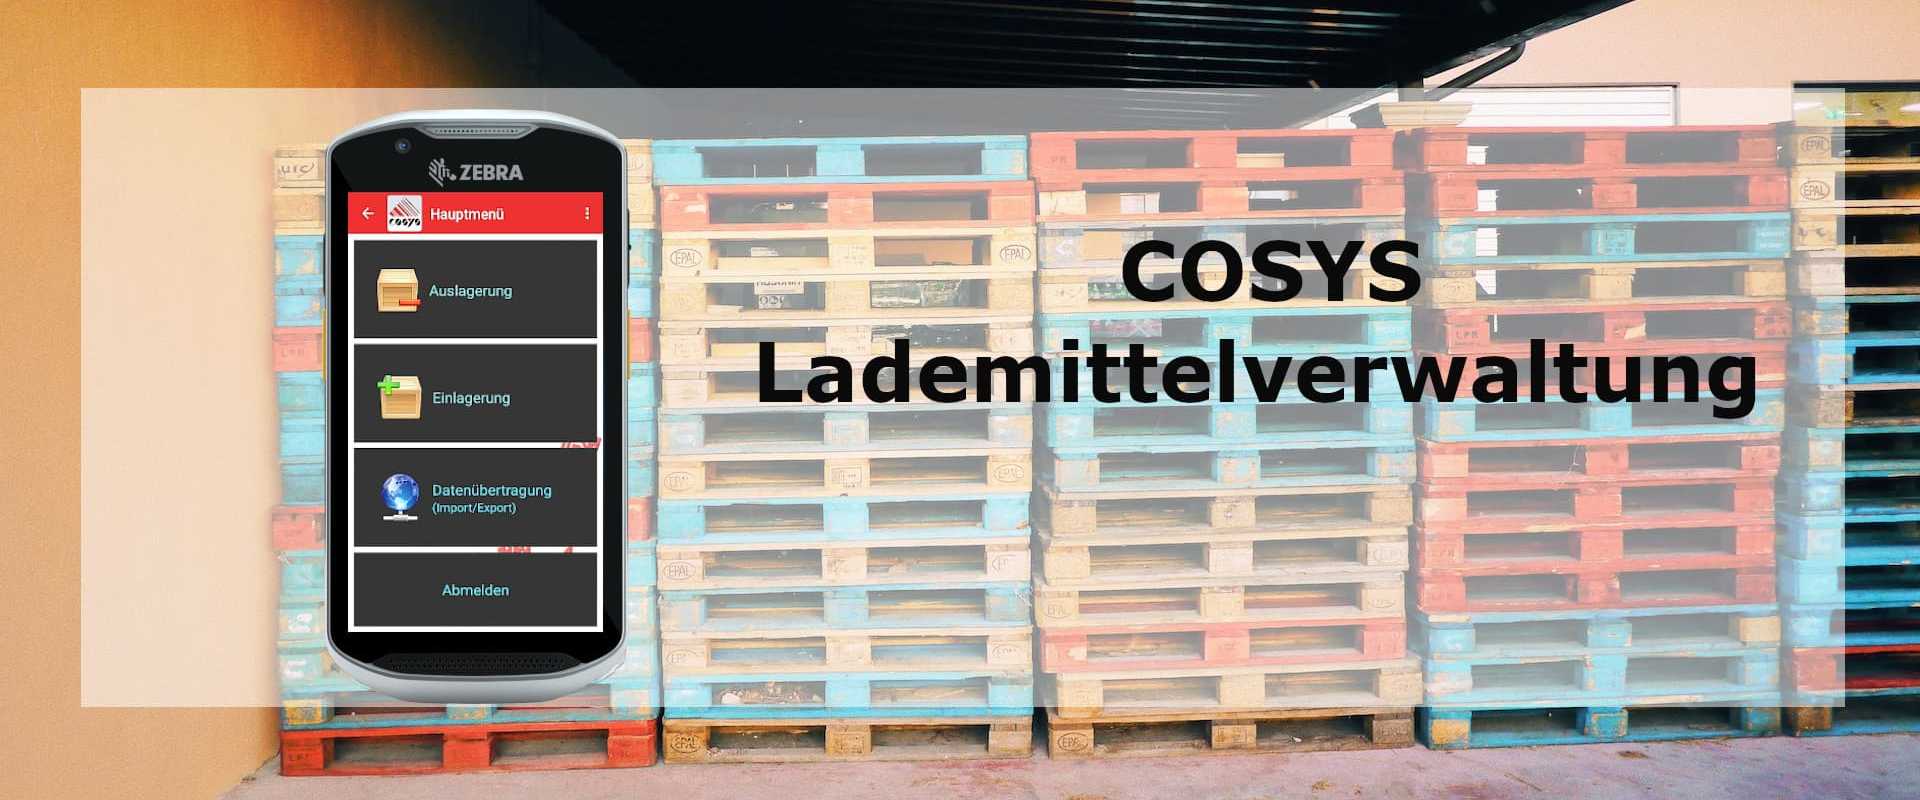 Ladungsträger-Logistik mit COSYS Lademittelverwaltung 